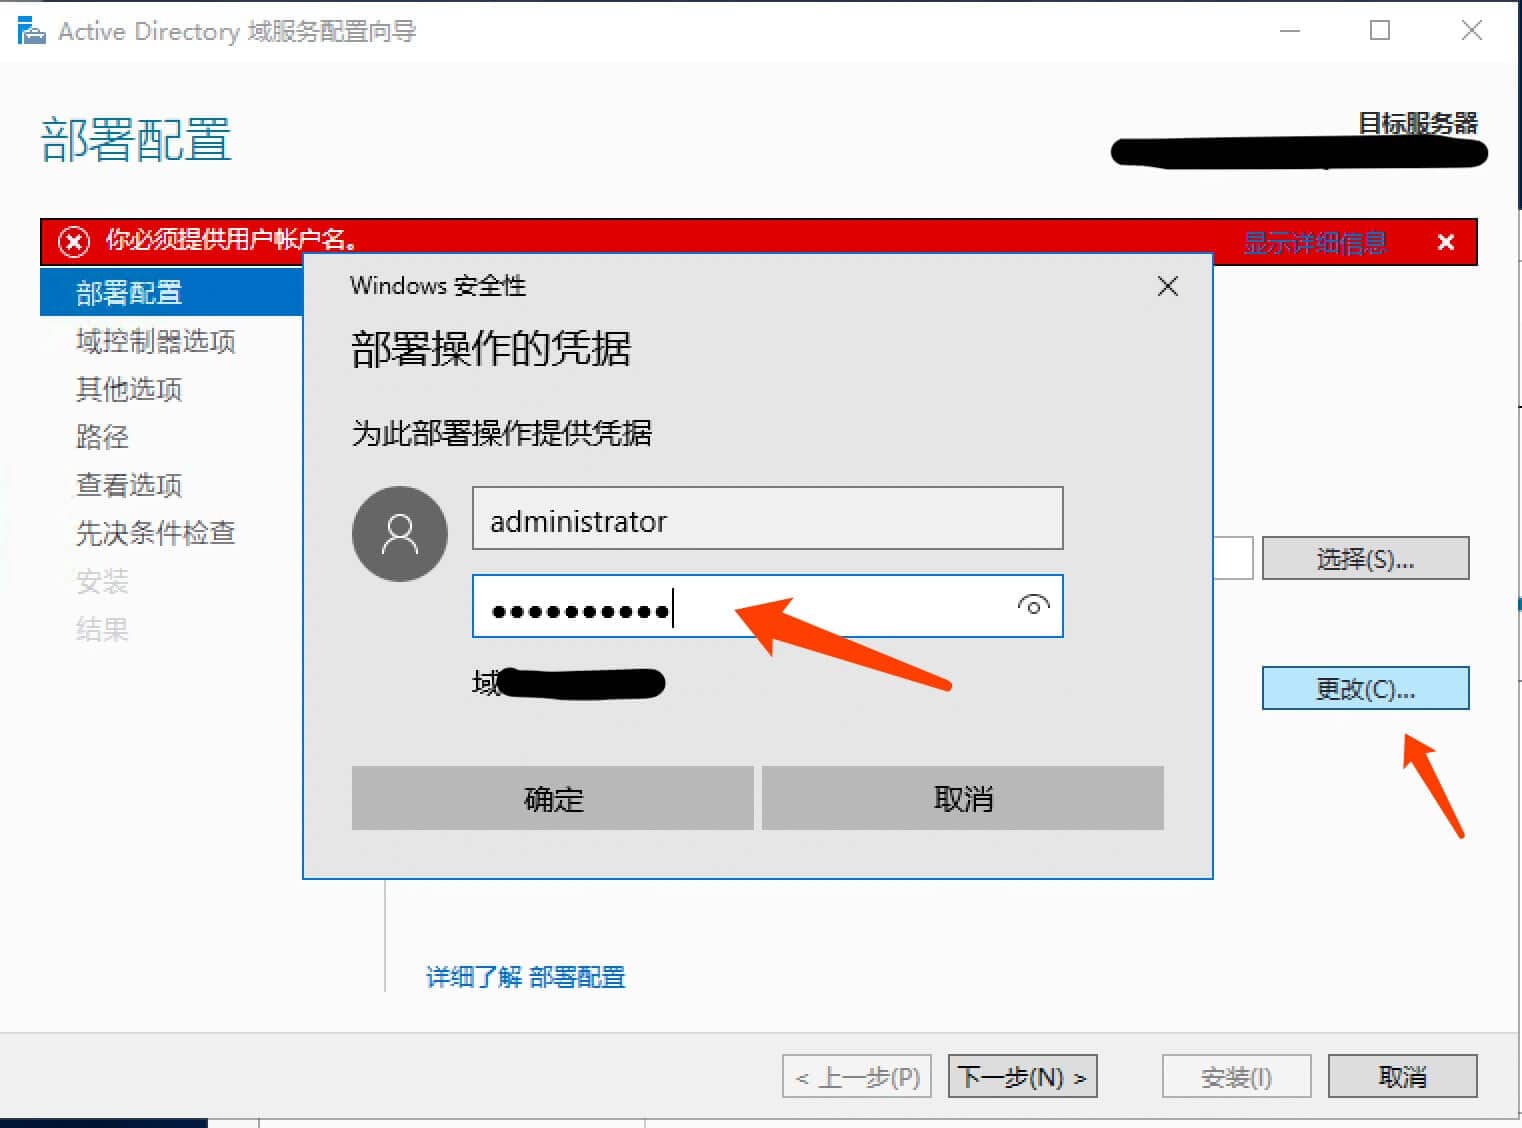 Windows AD 域控配置域账户登录